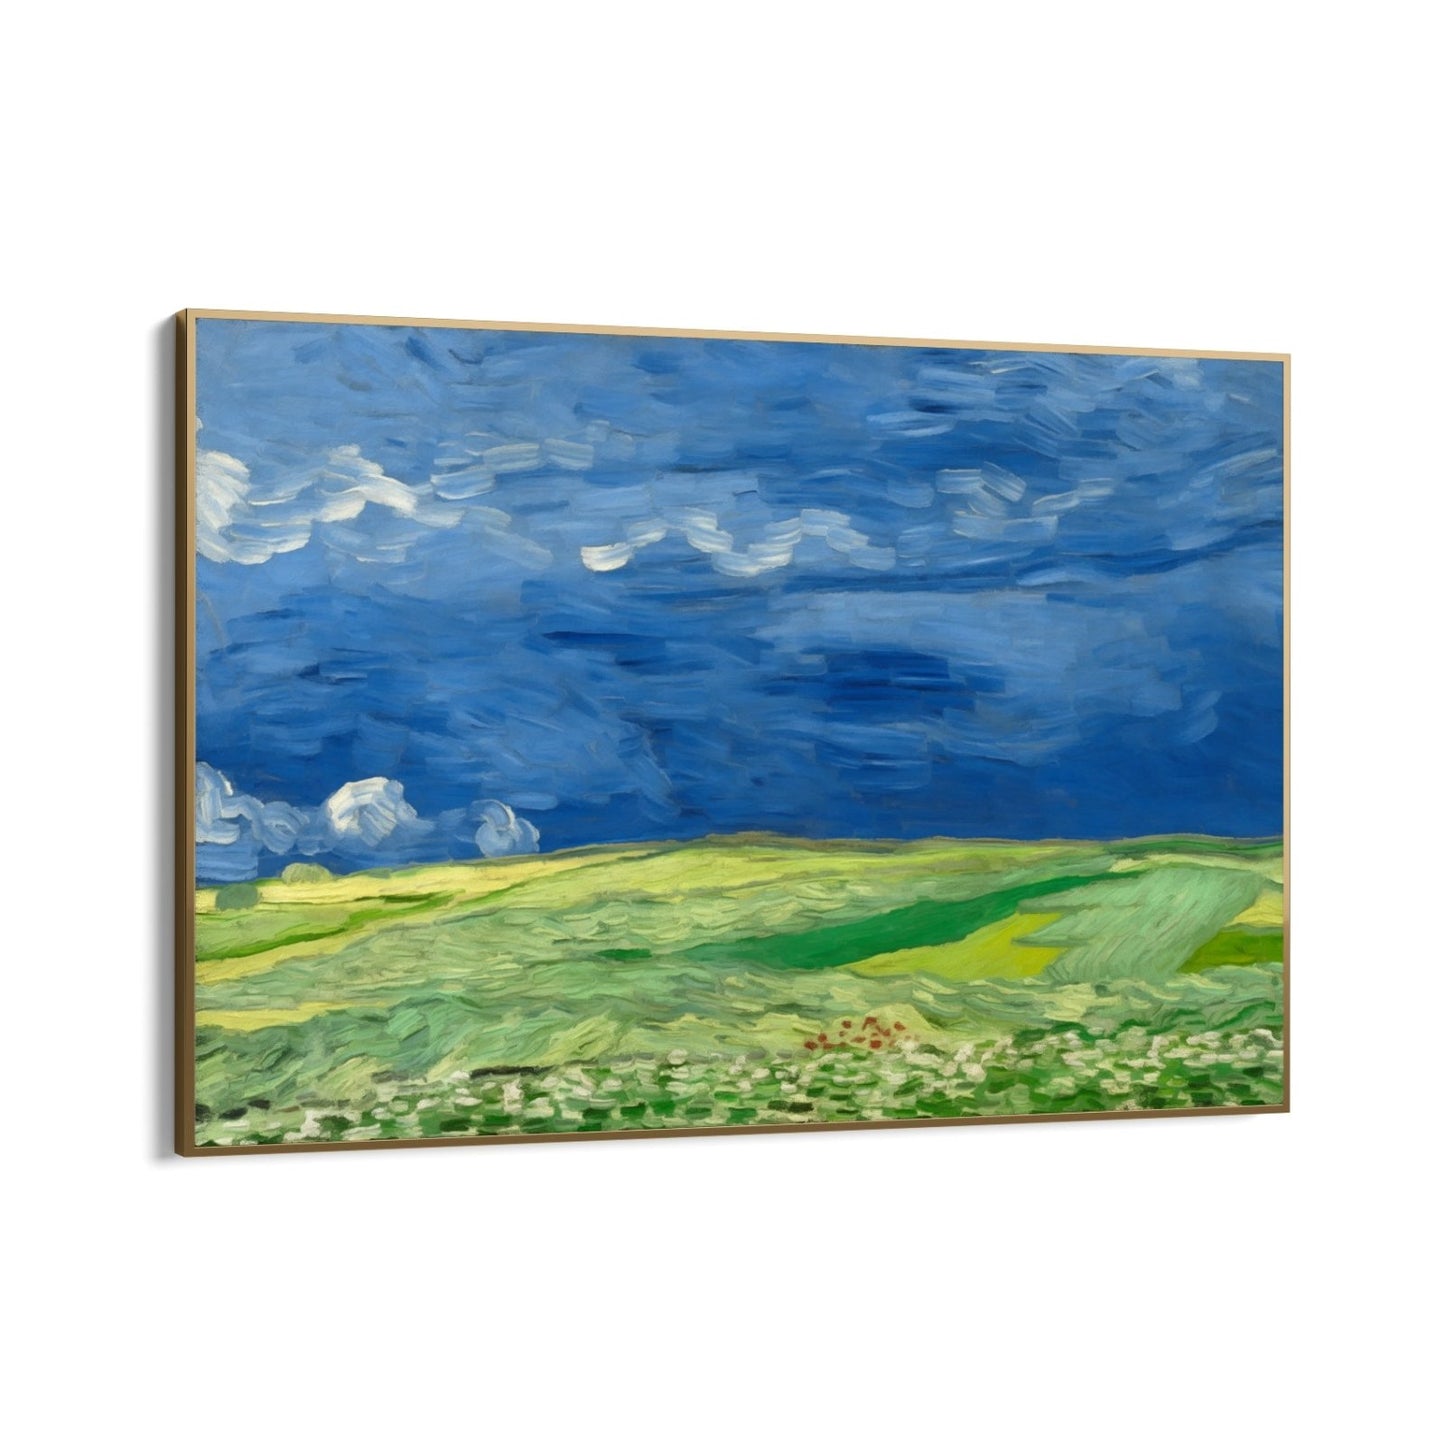 Pola pszenicy pod chmurami burzowymi, Vincent Van Gogh